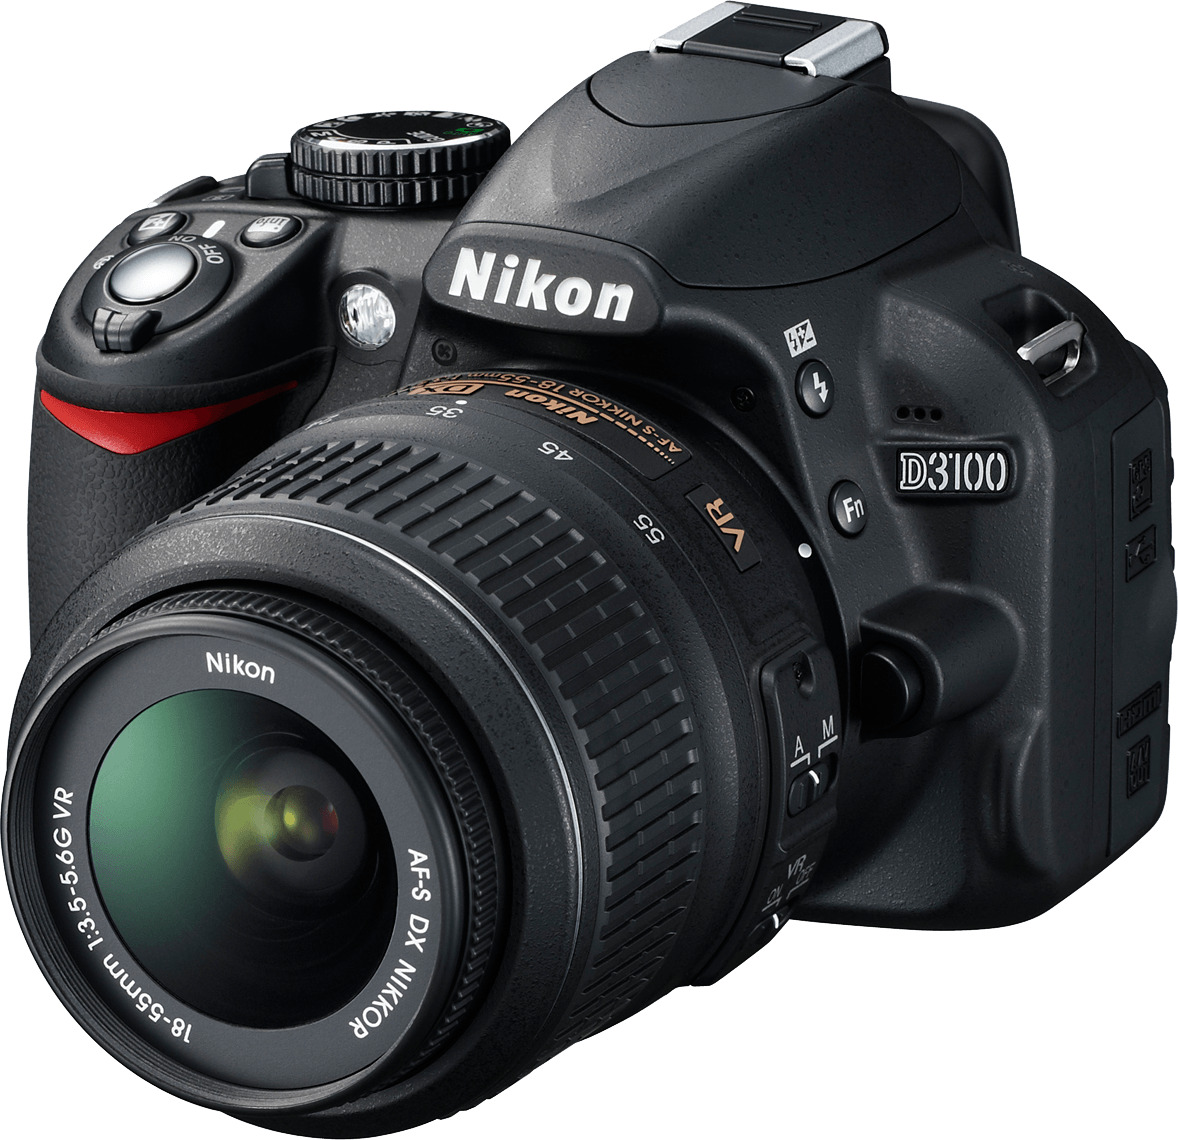 Nikon D 3100 Photo Camera icons